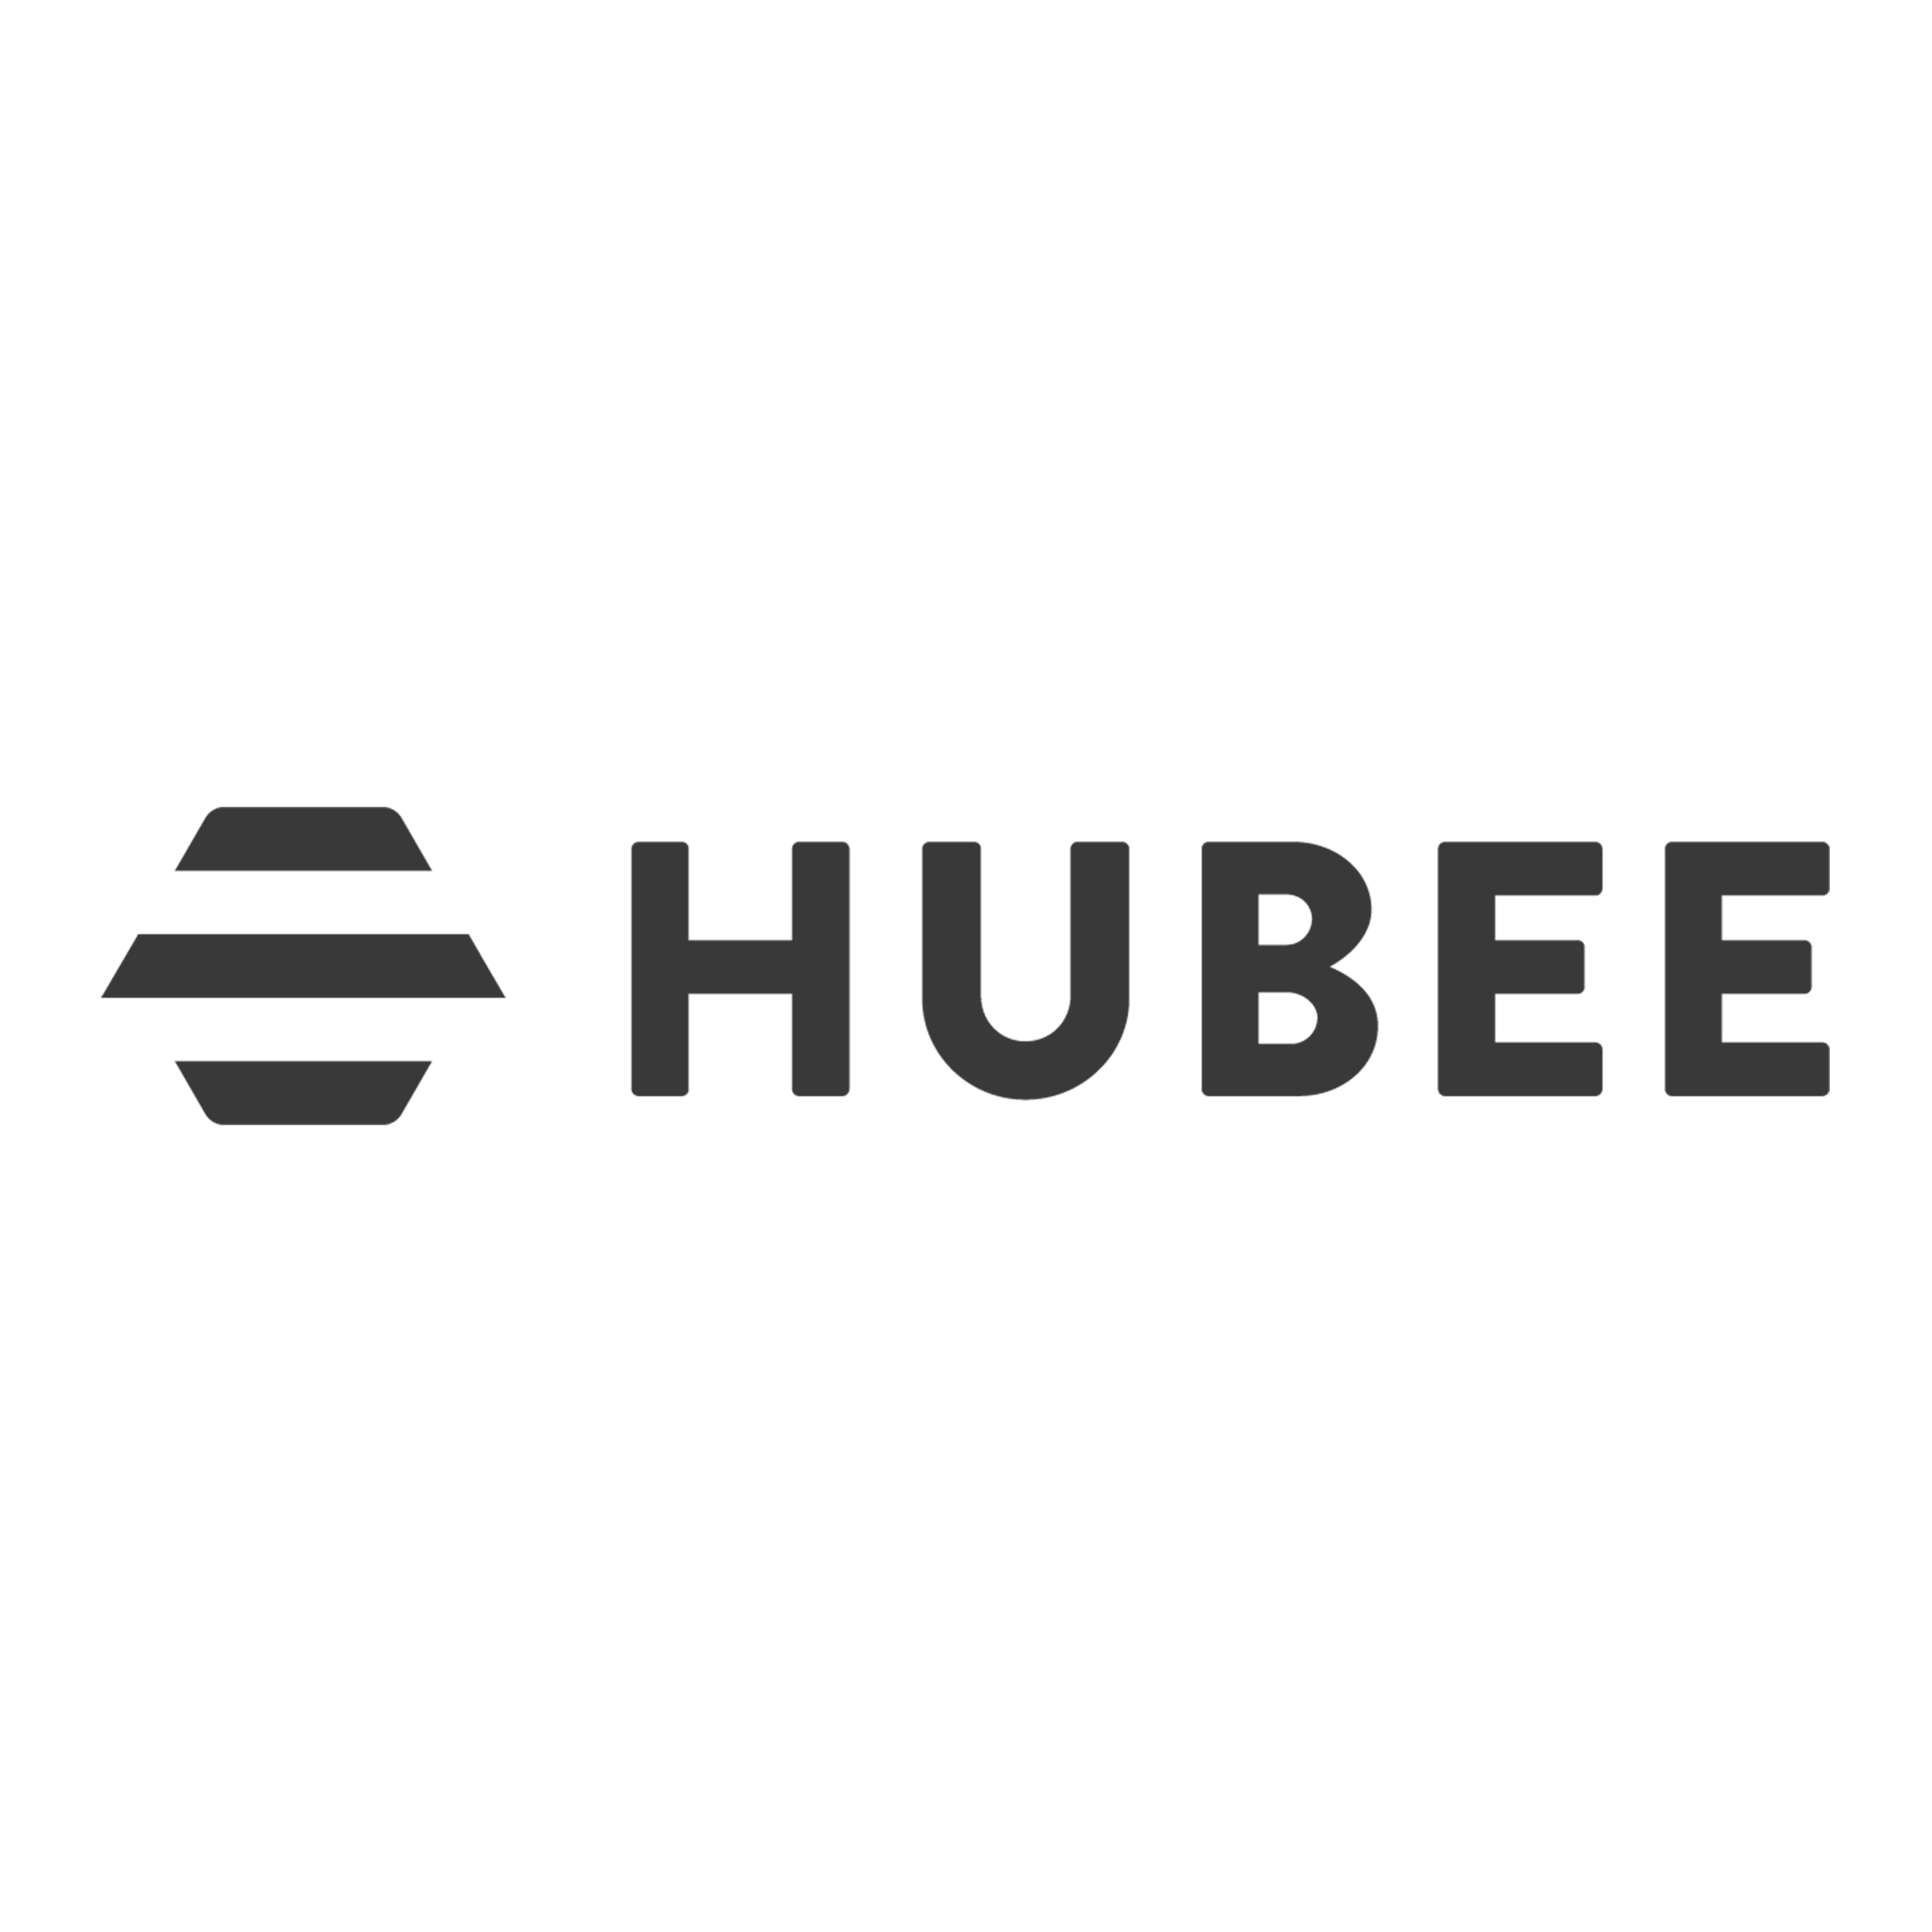 HuBee coupon codes